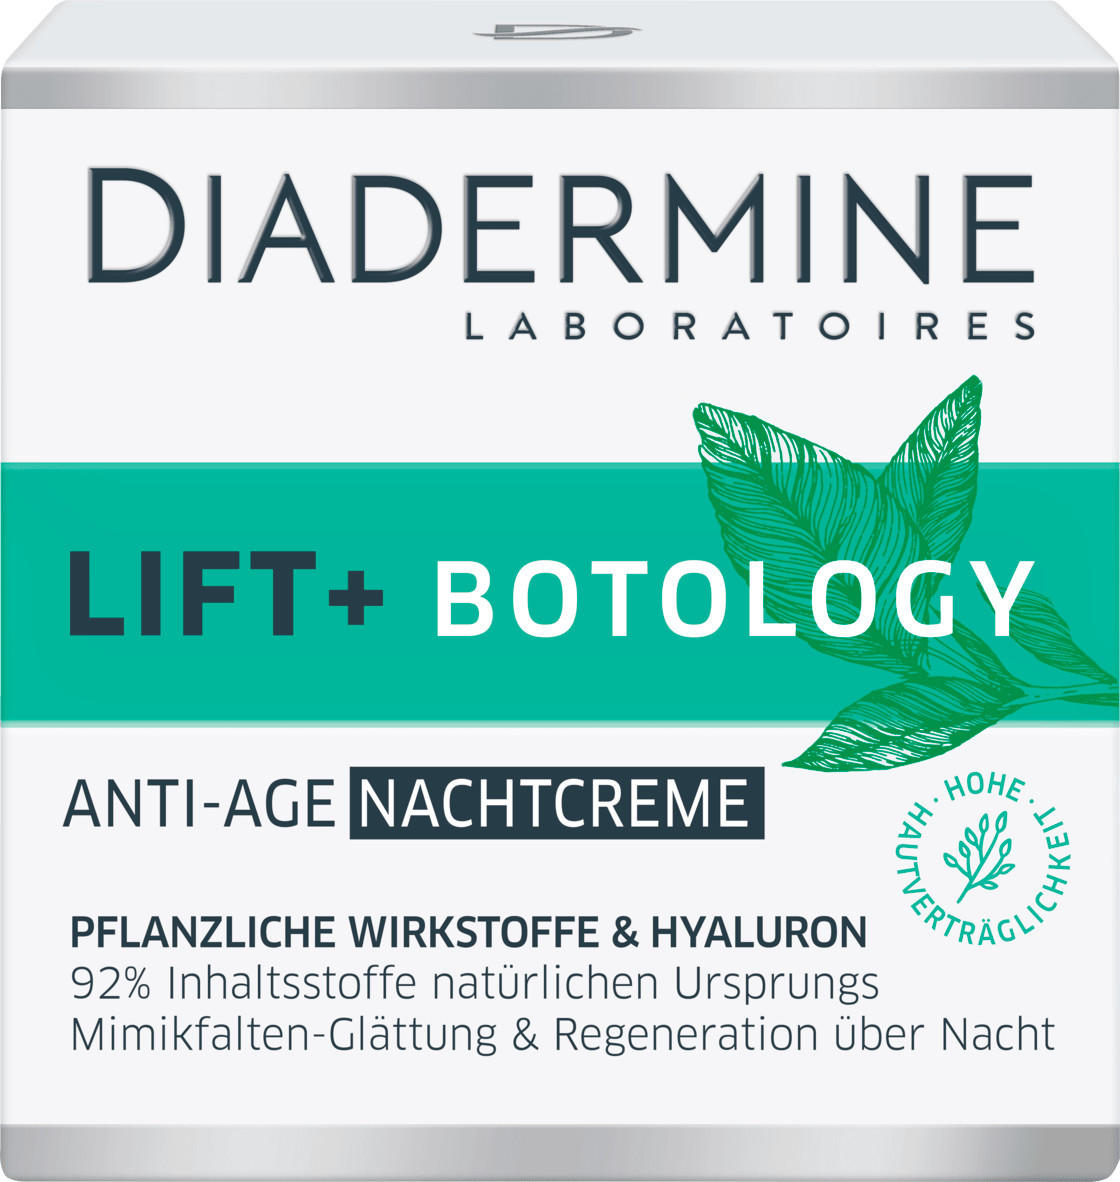 Diadermine Lift+ Botology Anti-Age Nachtcreme (50ml) Test: ❤️ TOP Angebote  ab 7,99 € (August 2022) Testbericht.de